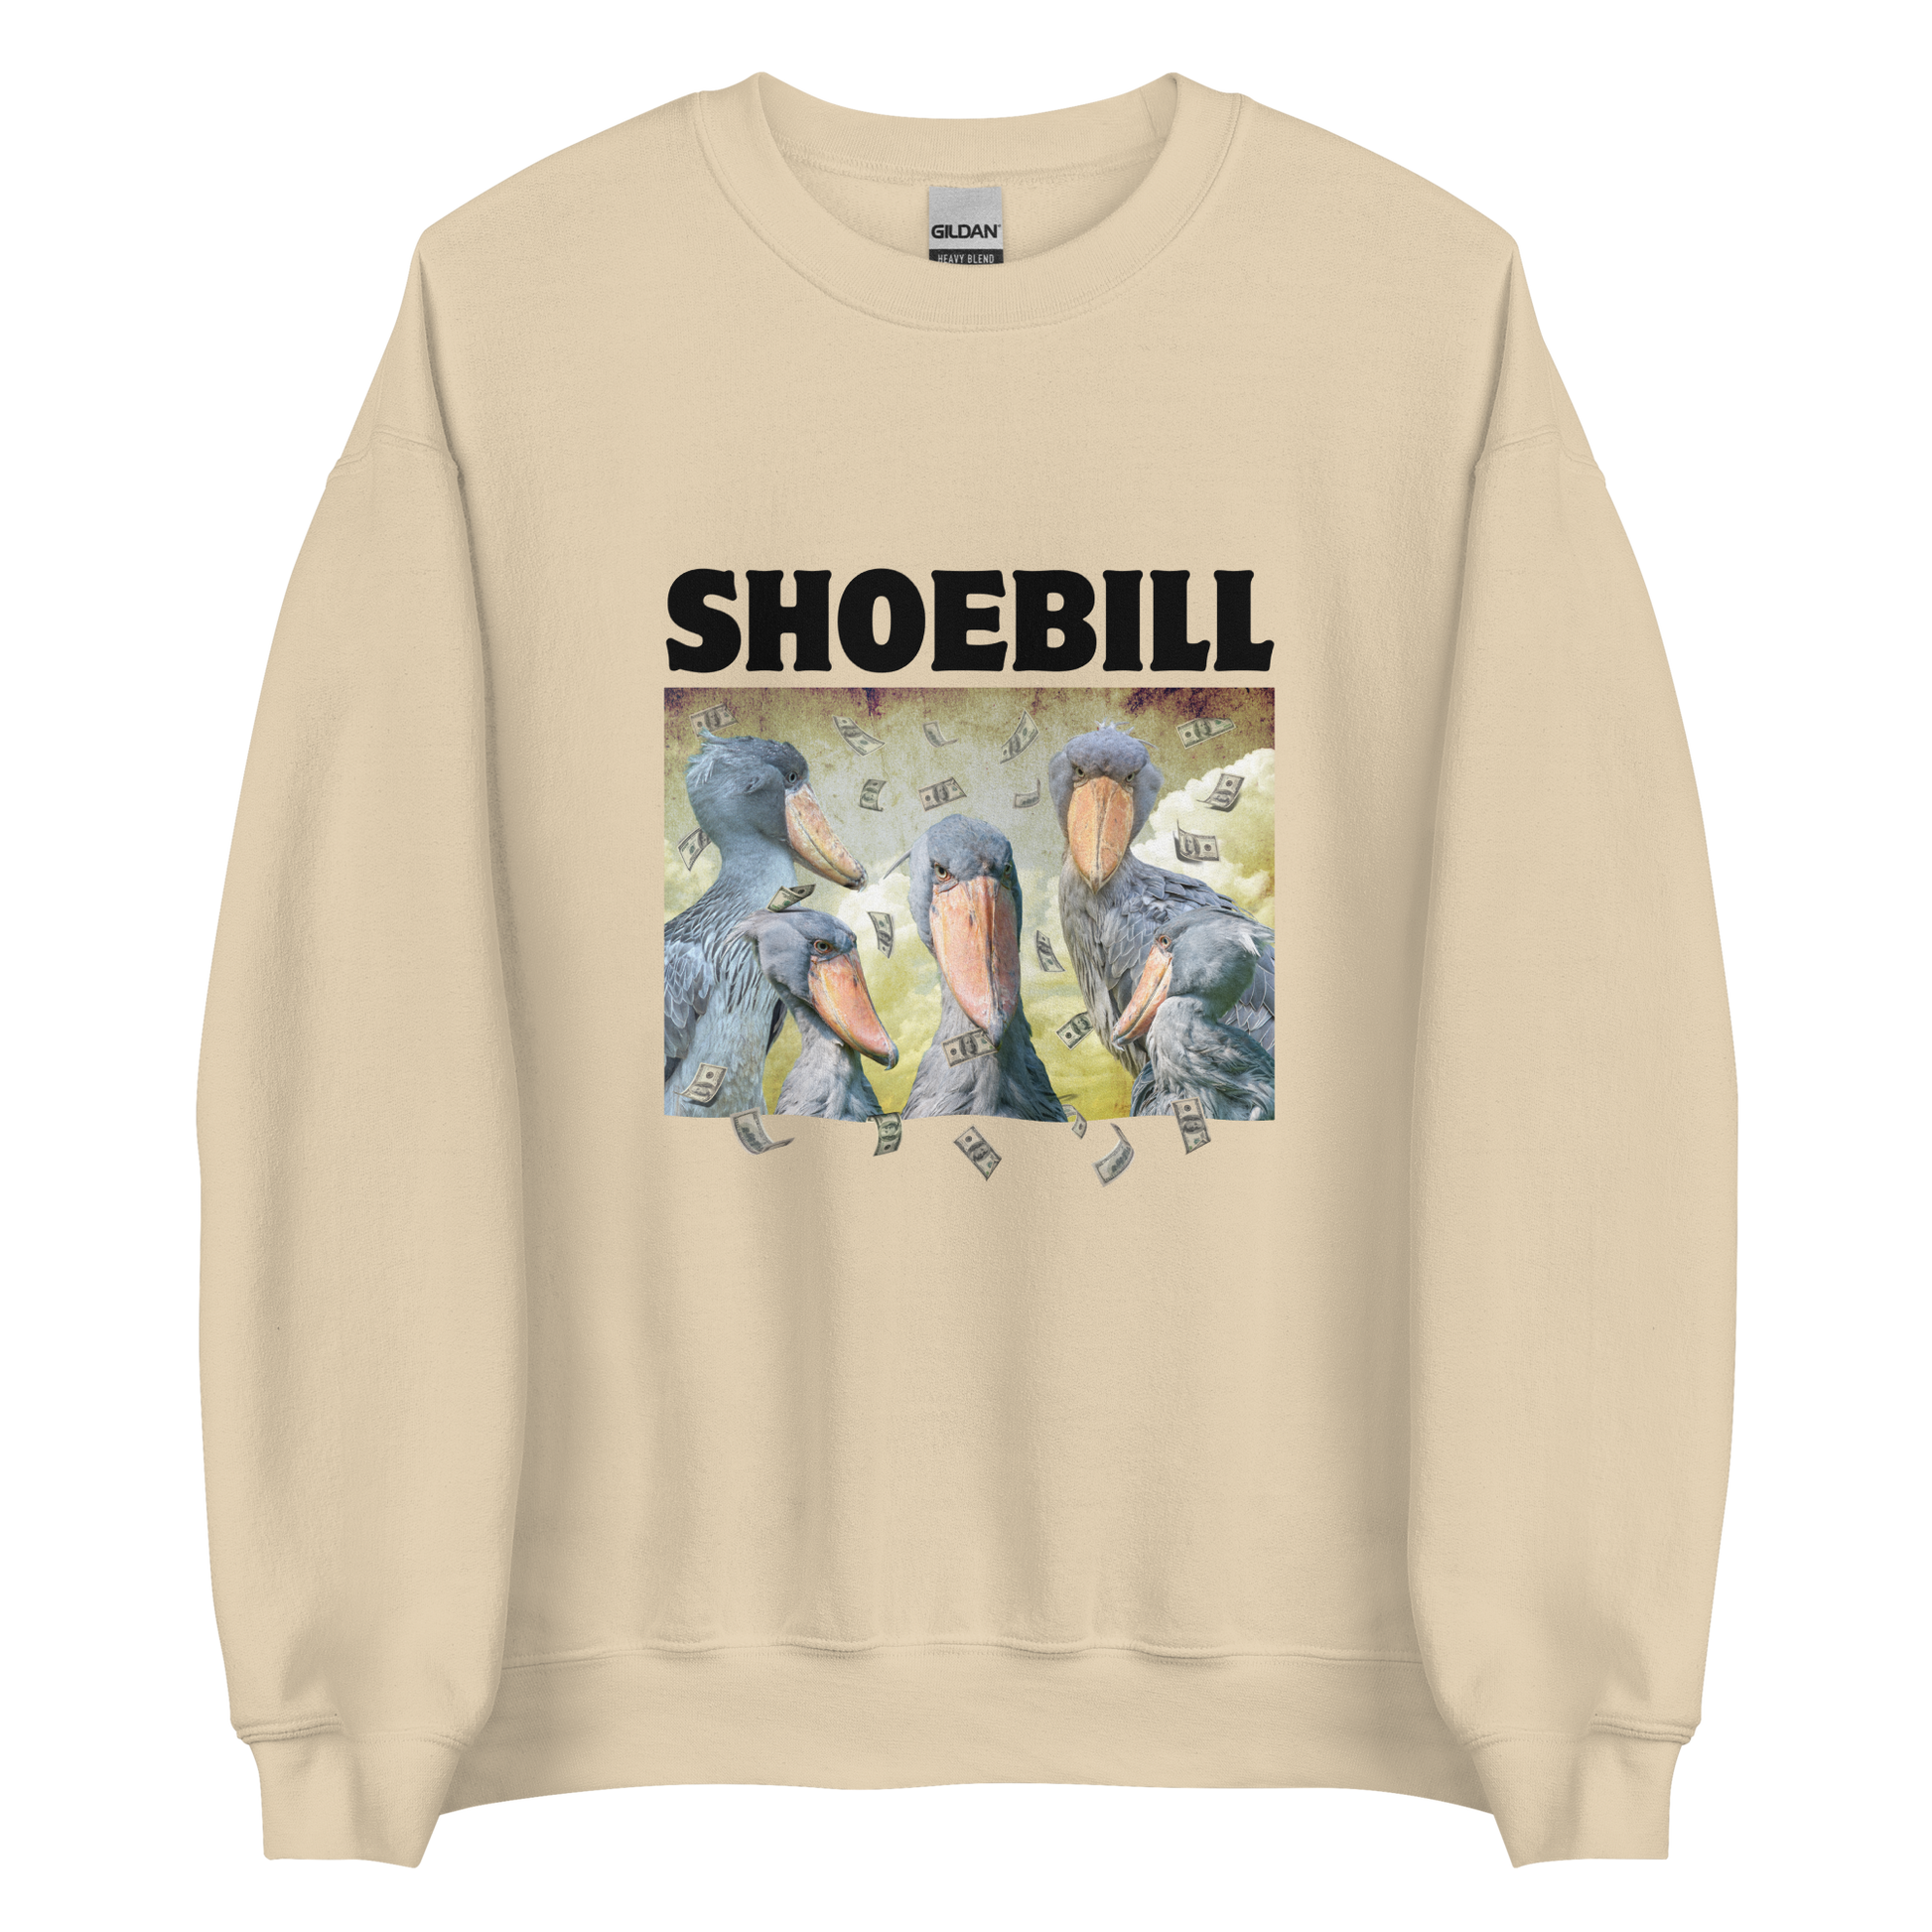 Sand Colored Shoebill Sweatshirt featuring a cool Shoebill graphic on the chest - Artsy/Funny Graphic Shoebill Stork Sweatshirts - Boozy Fox